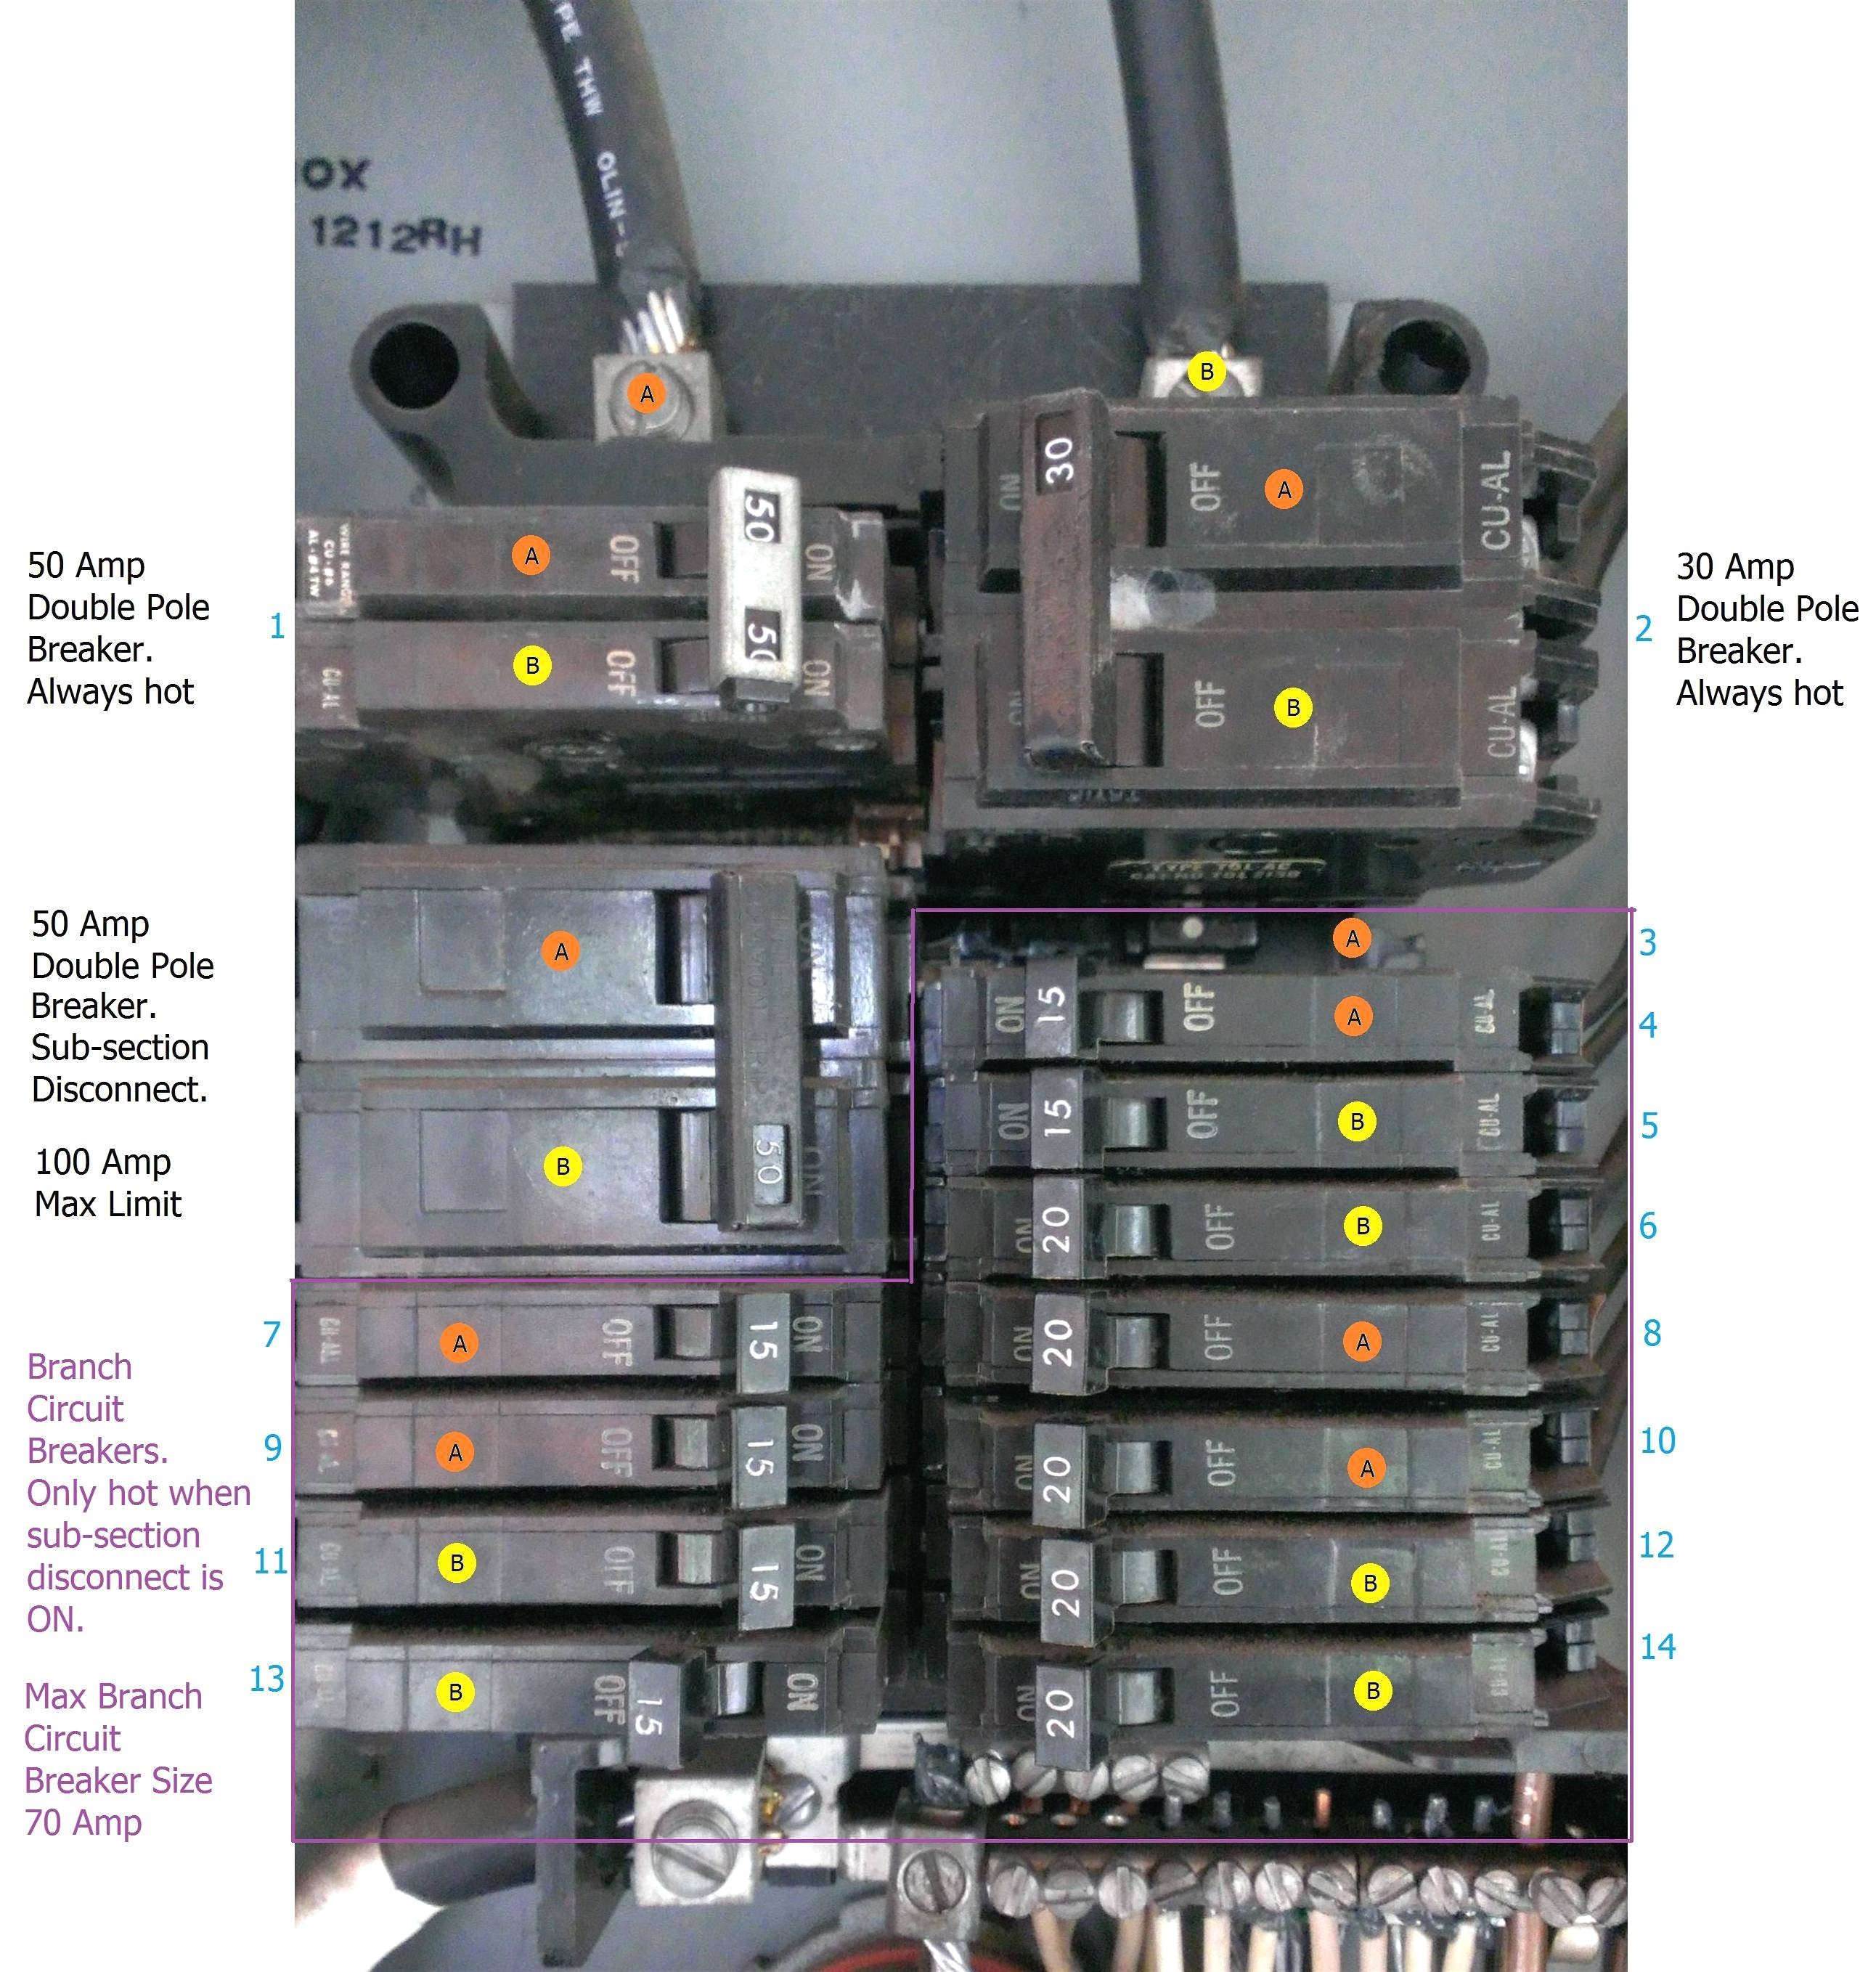 Breaker Box Wiring Diagram Inspirational Square D Breaker Box Wiring Diagram In Inside Main 800 Jpg